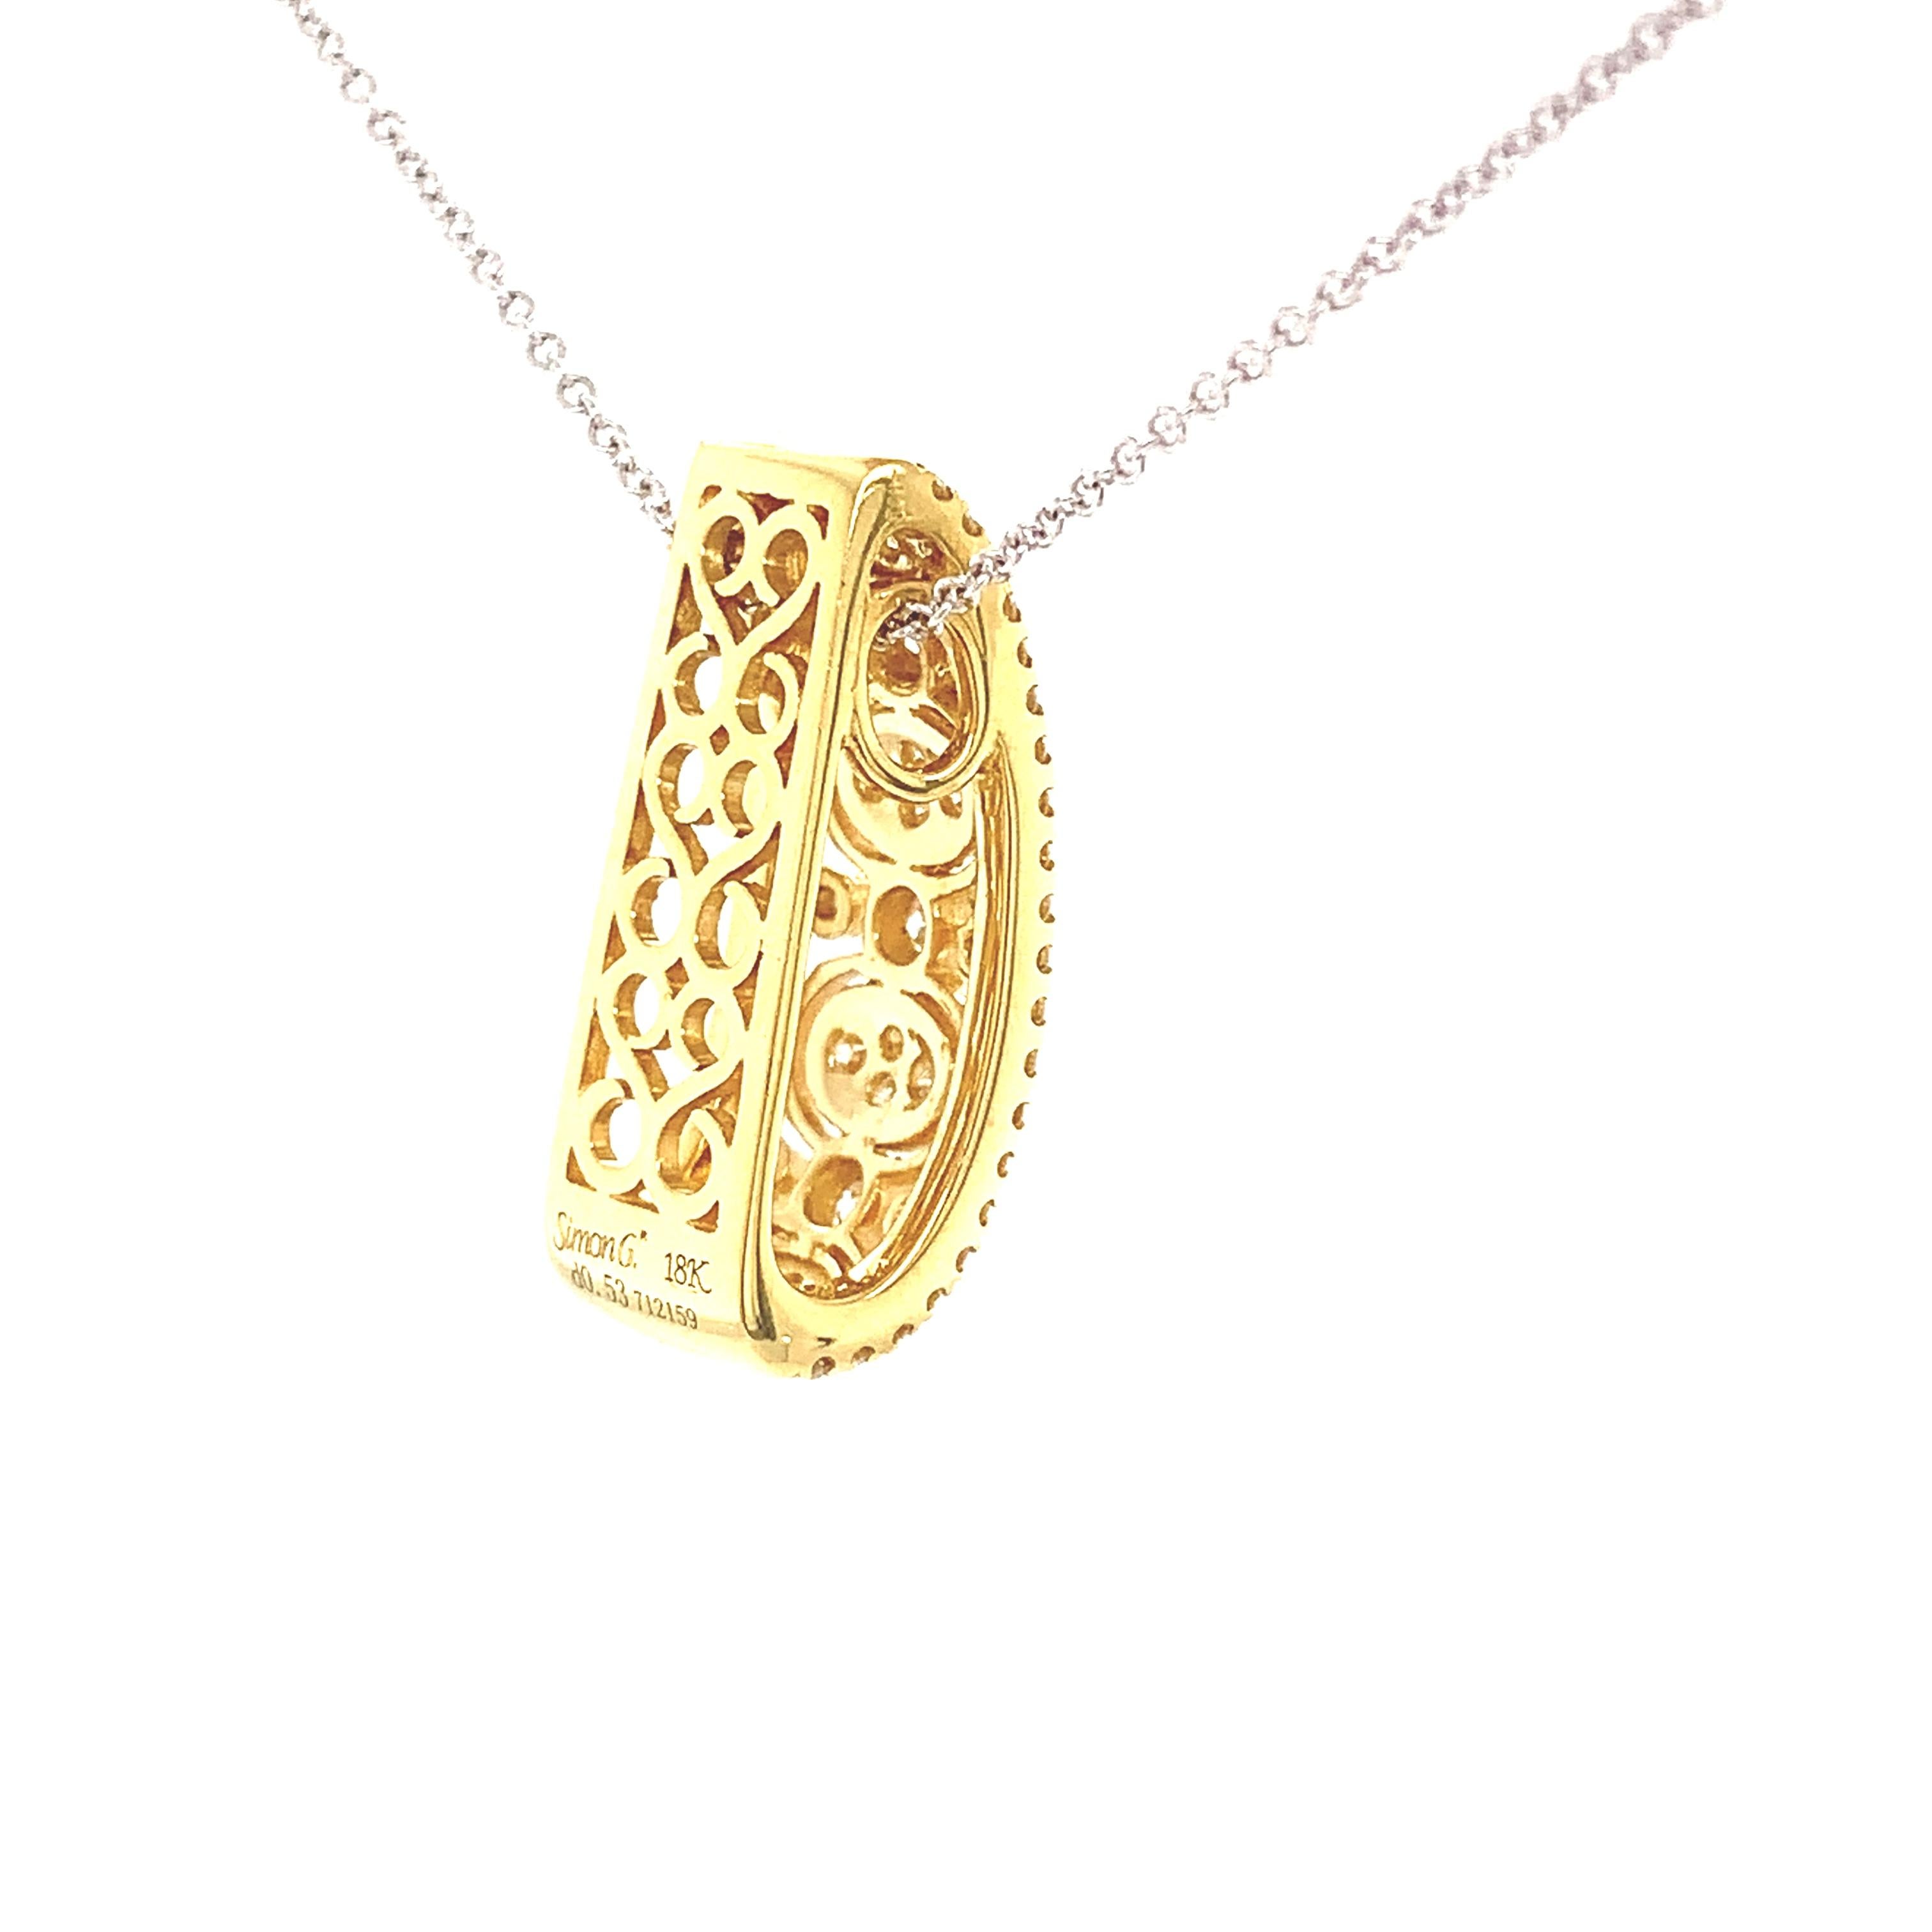 Brilliant Cut Simon G. Vintage Style Filigree Diamond Pendant Necklace in 18K Yellow Gold For Sale